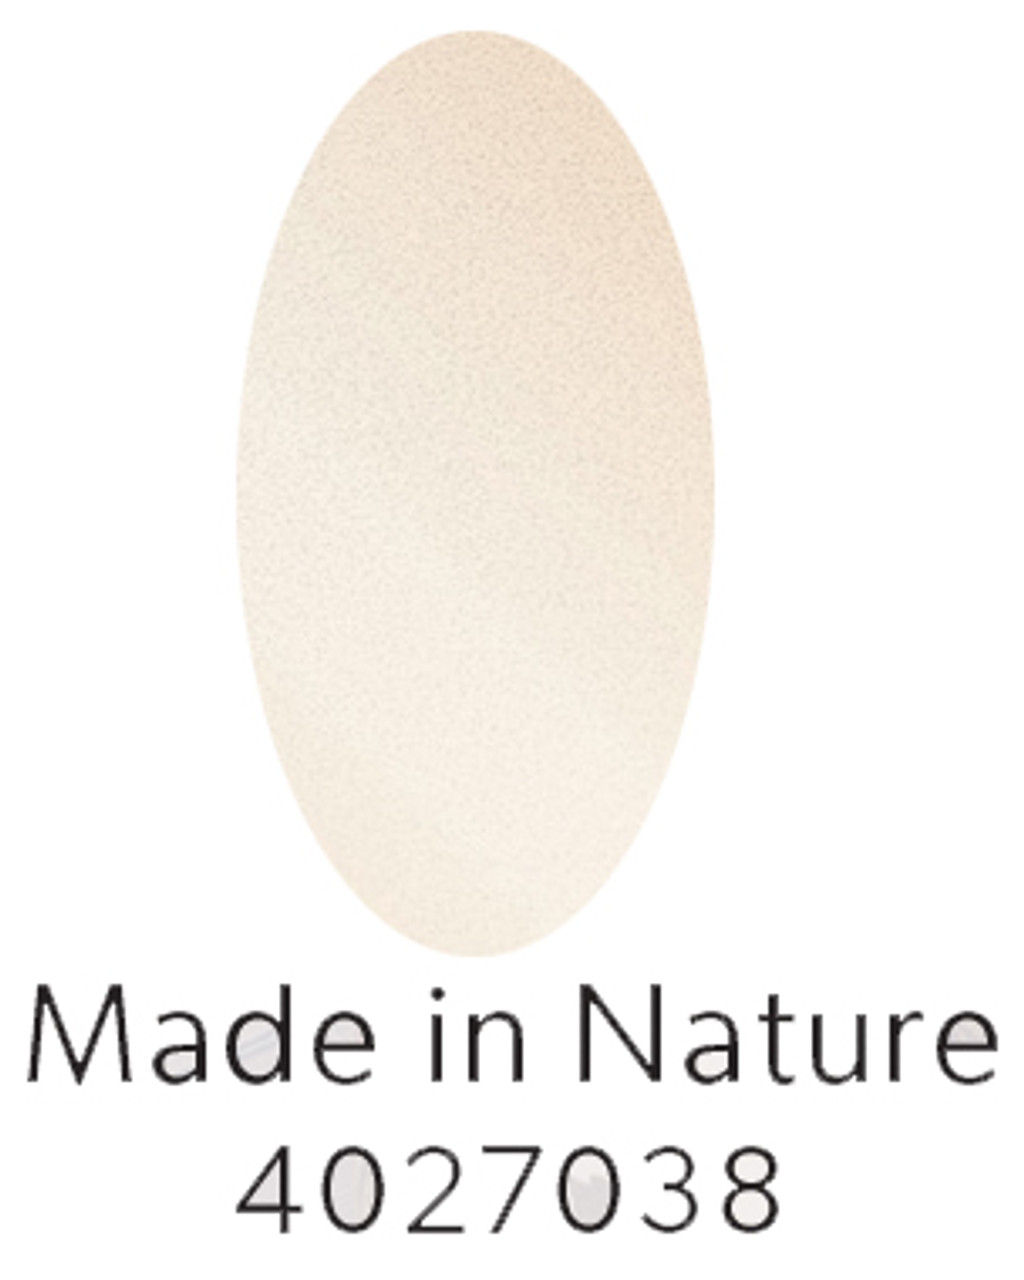 U2 Eco-Logic Color Powder - Made in Nature